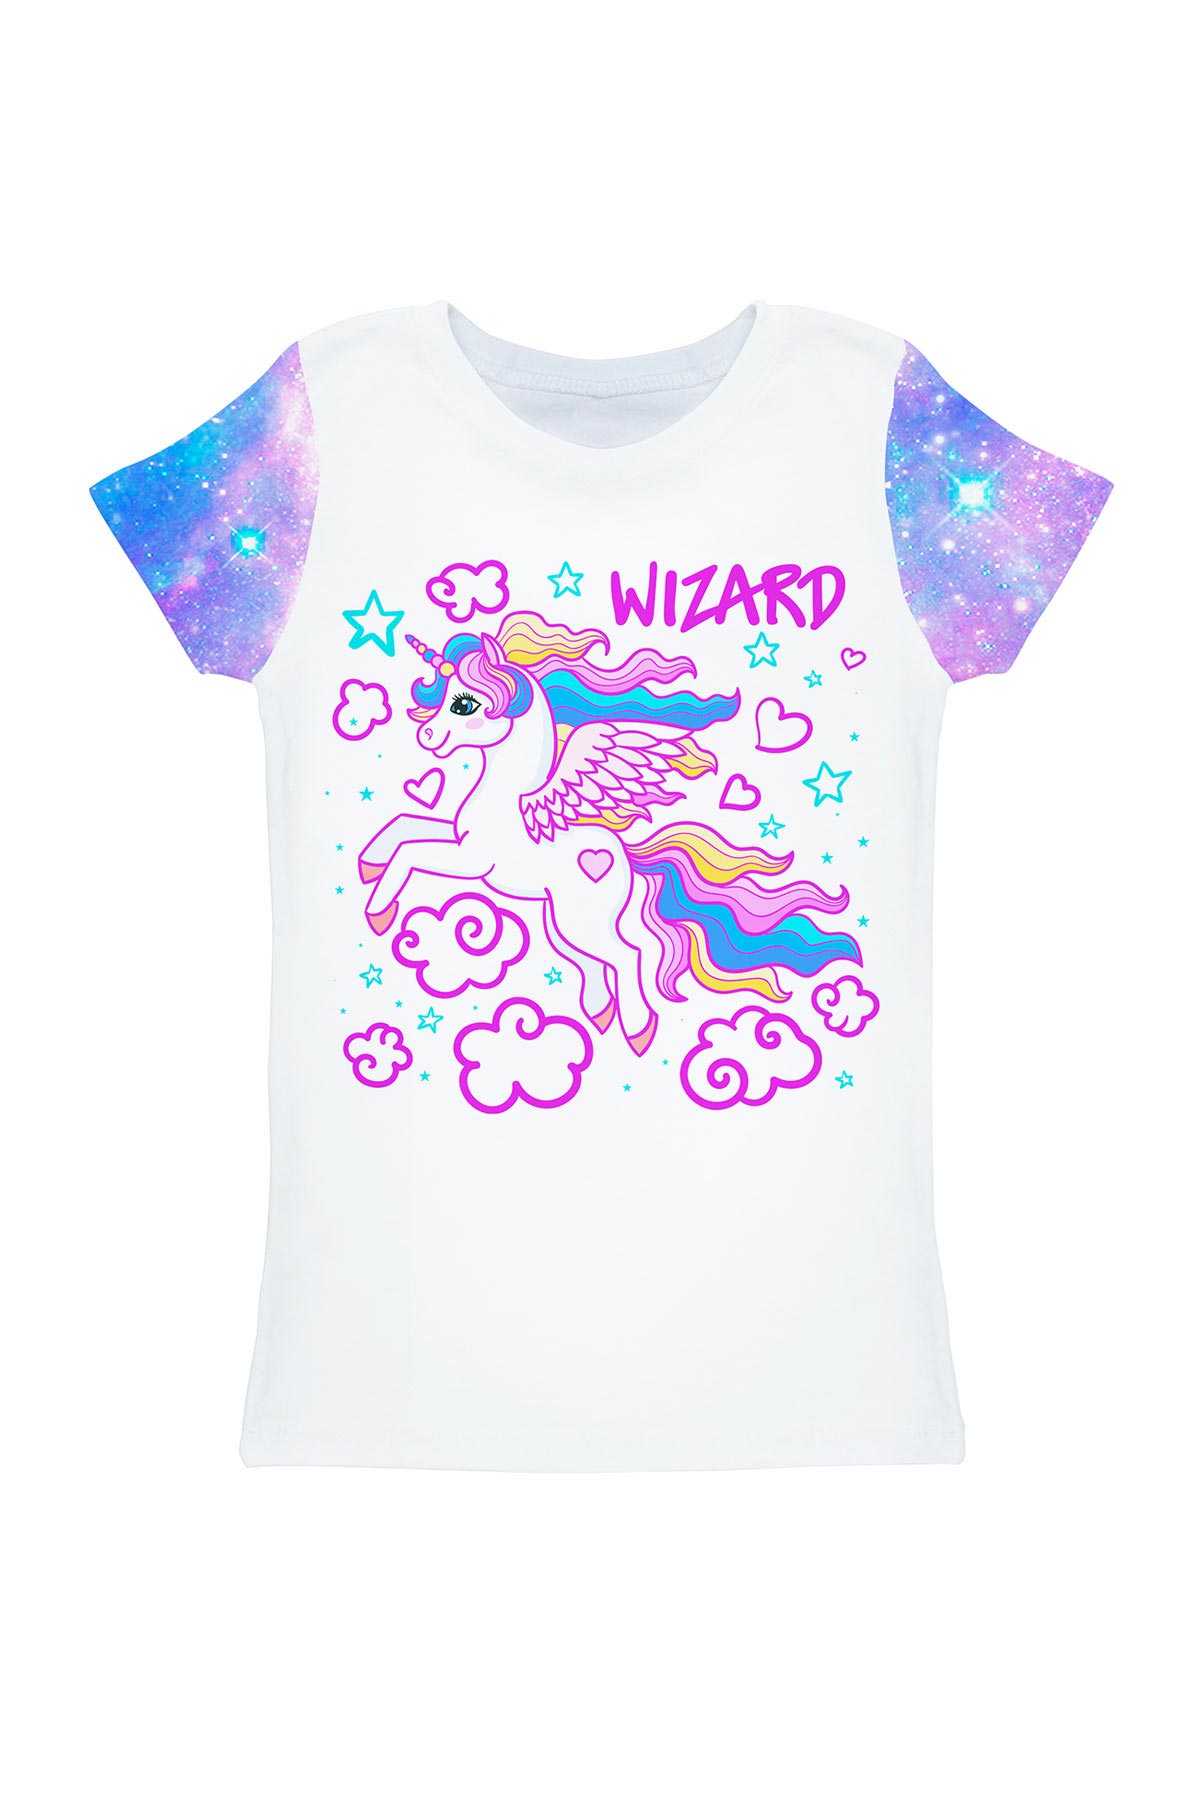 Wizard Zoe Bright Colored Unicorn Print Cute Designer T-Shirt - Kids - Pineapple Clothing